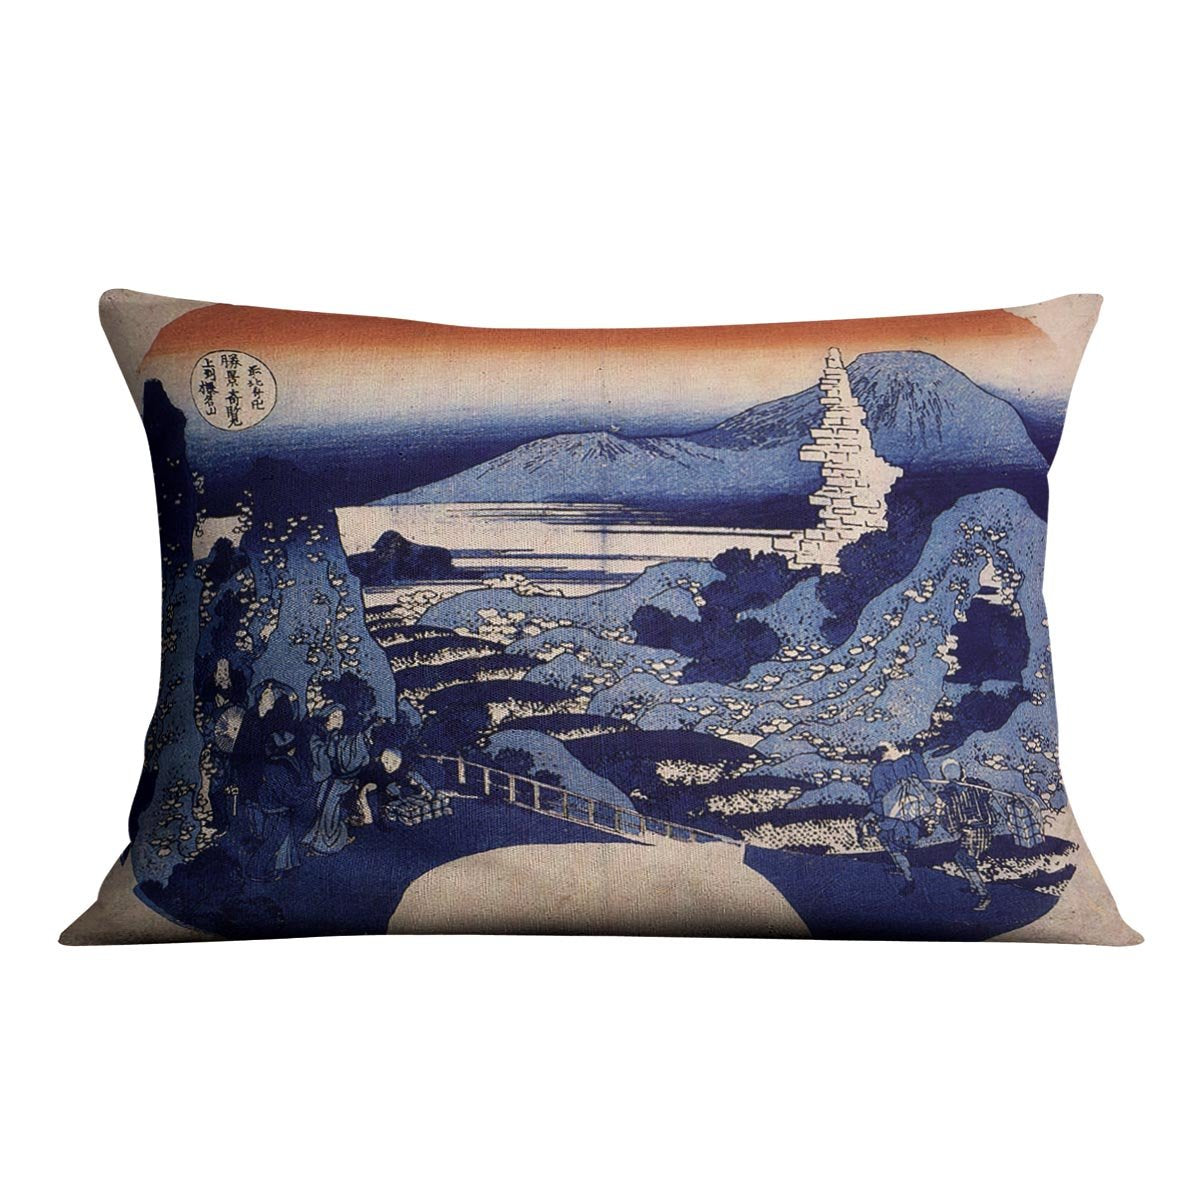 Mount Haruna by Hokusai Throw Pillow